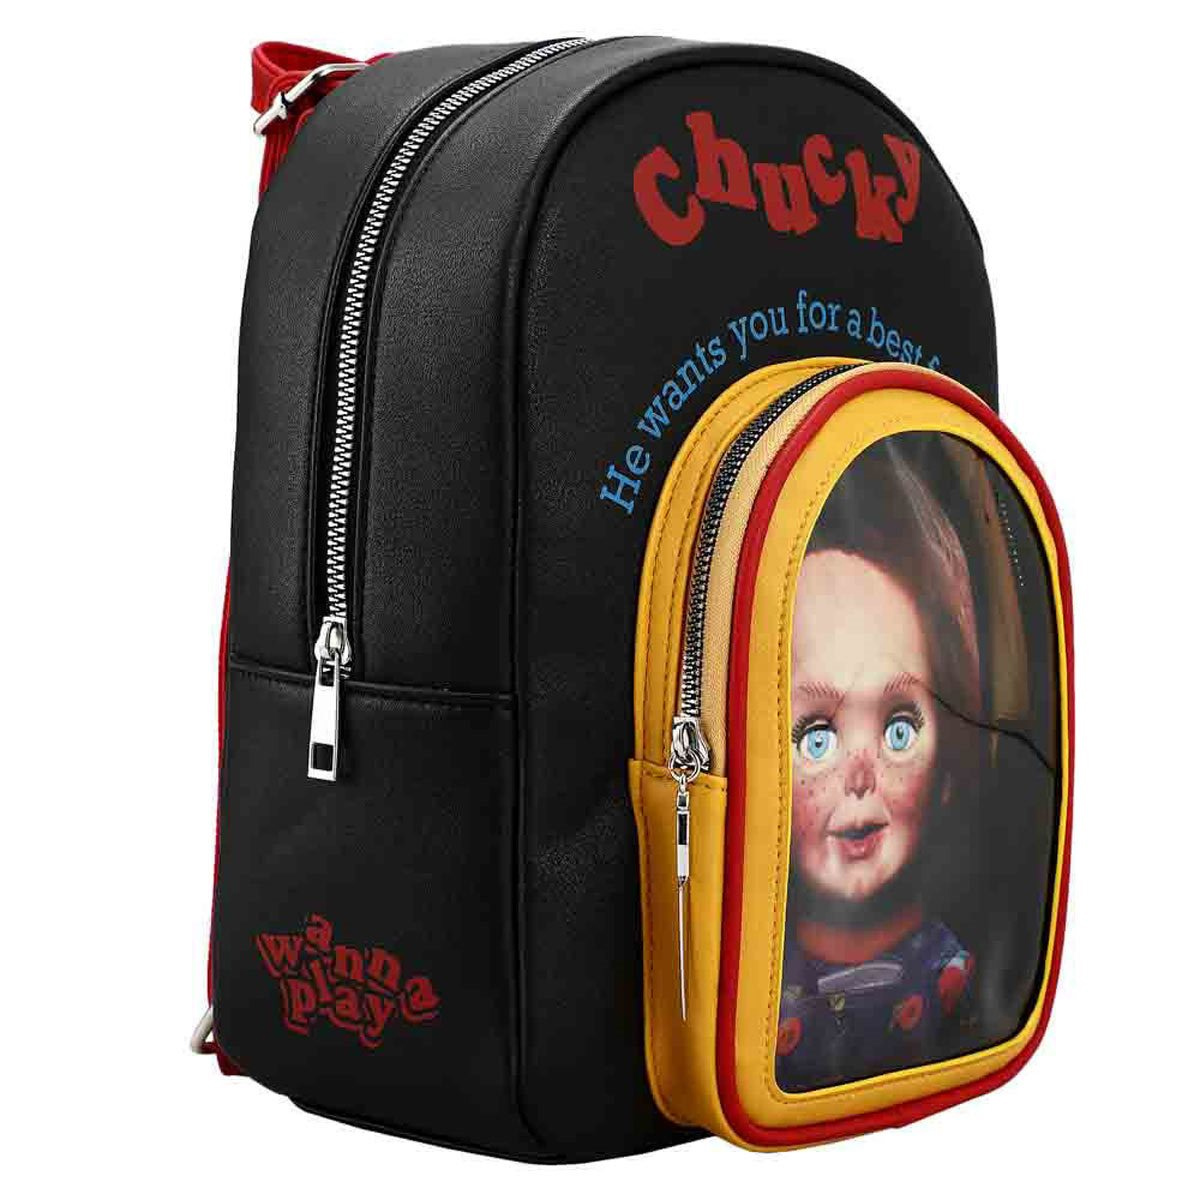 Child's Play Chuky Toy Box Mini-Backpack